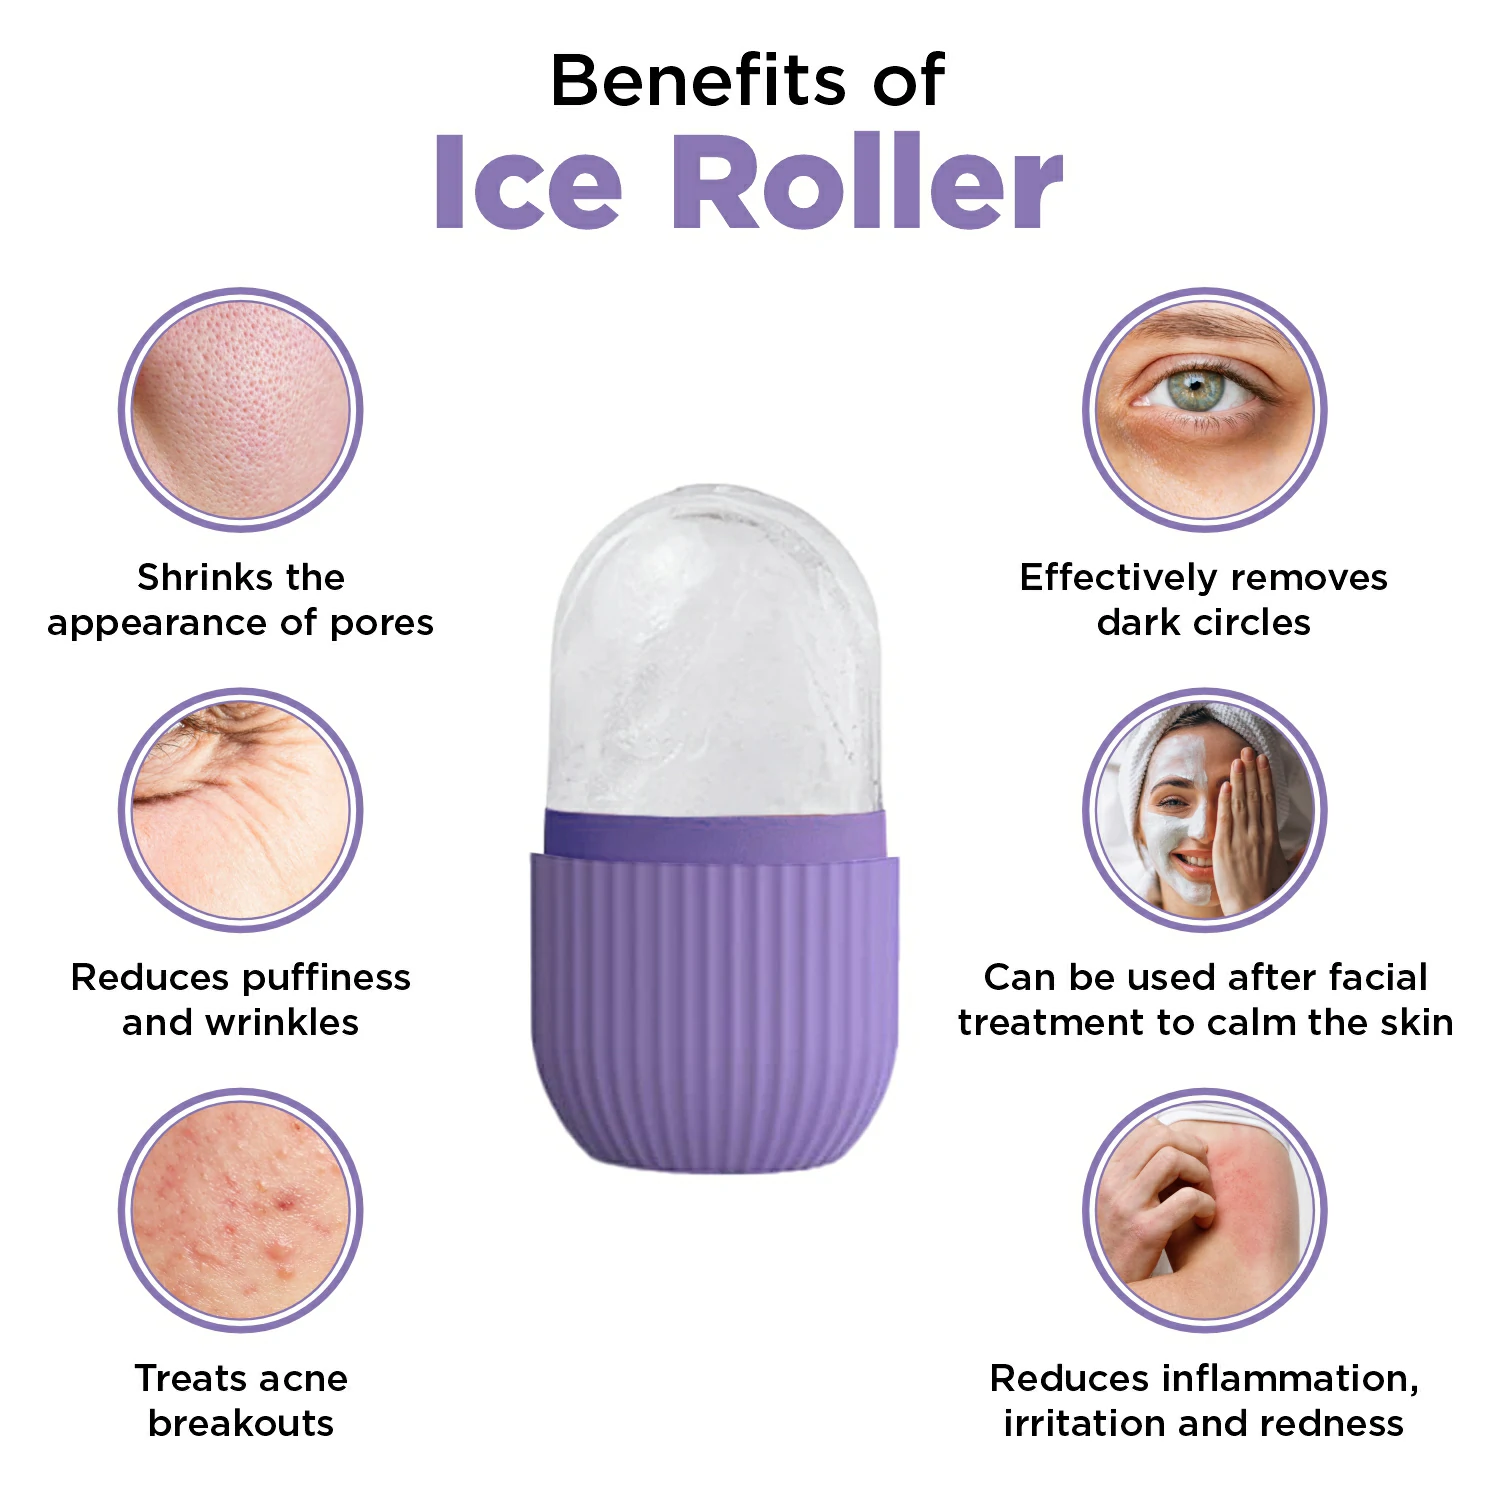 Benefits of Ice Roller